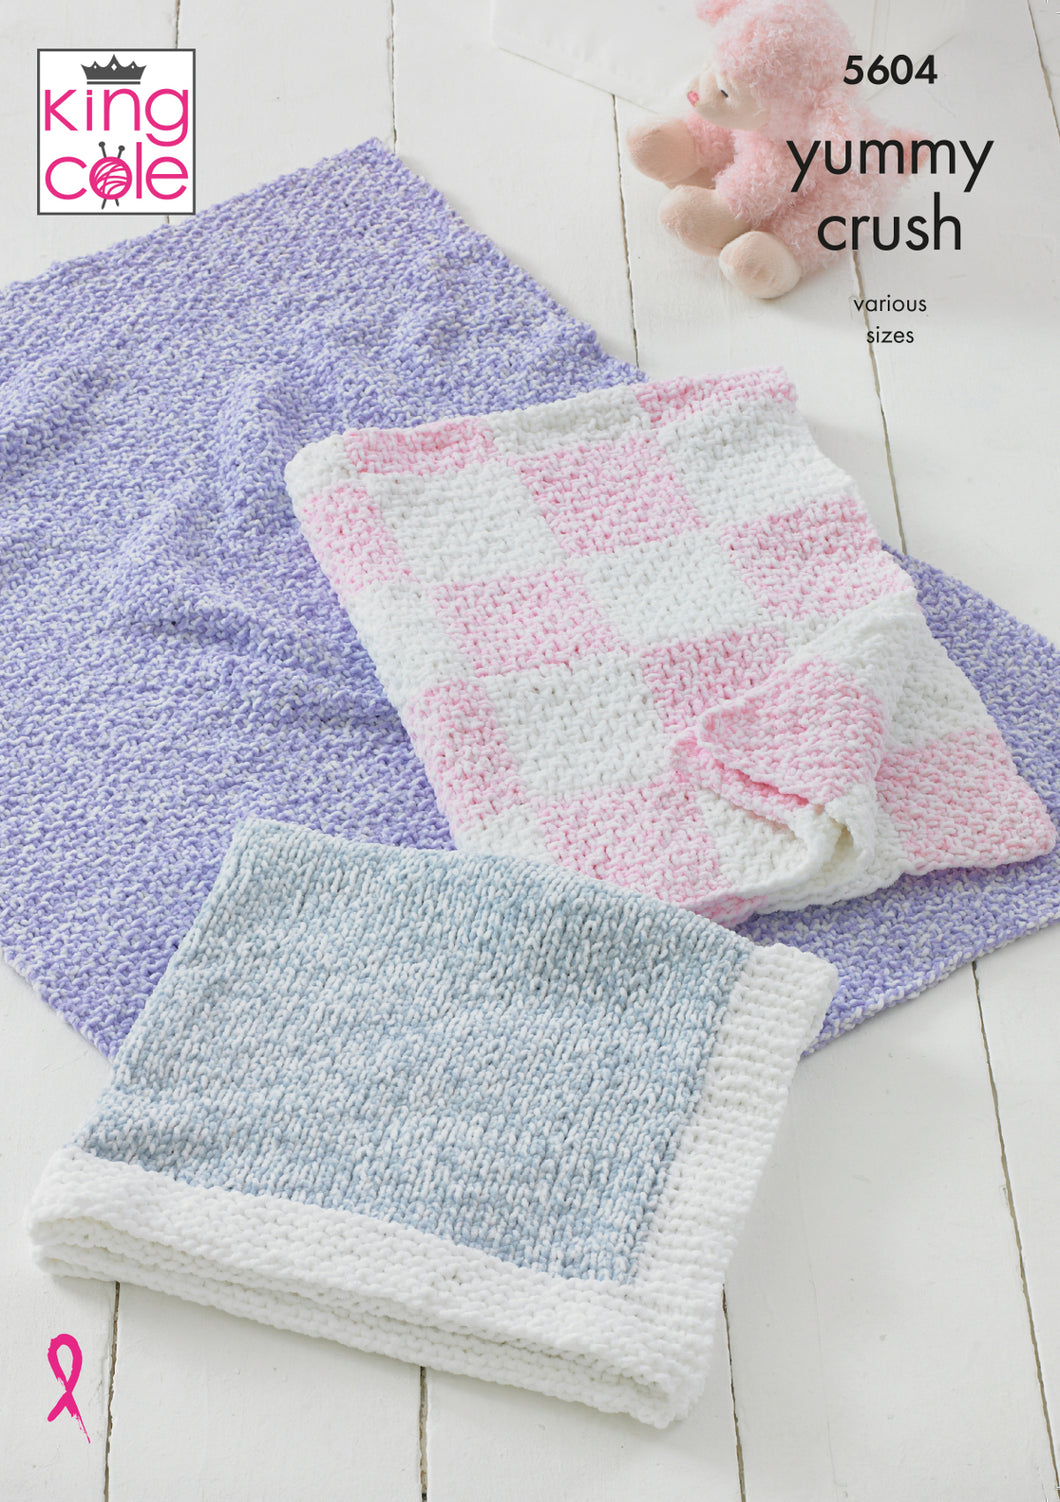 King Cole Yummy Crush Chunky Knitting Pattern - Blankets (5604)